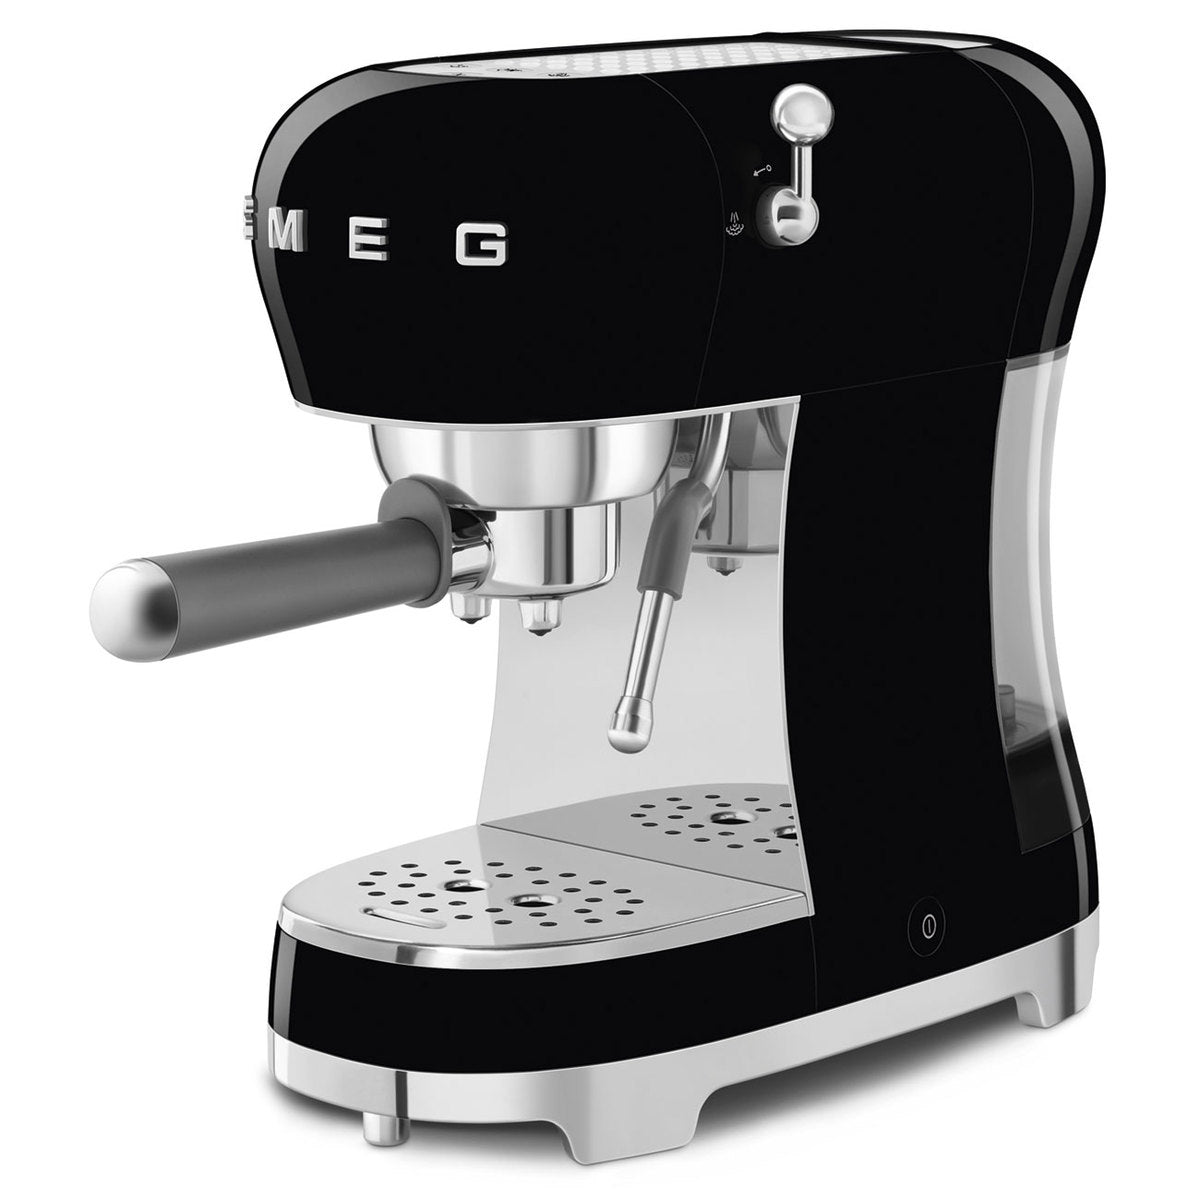 Smeg ECF02BLEU Espresso koffiezetter jaren 50 model